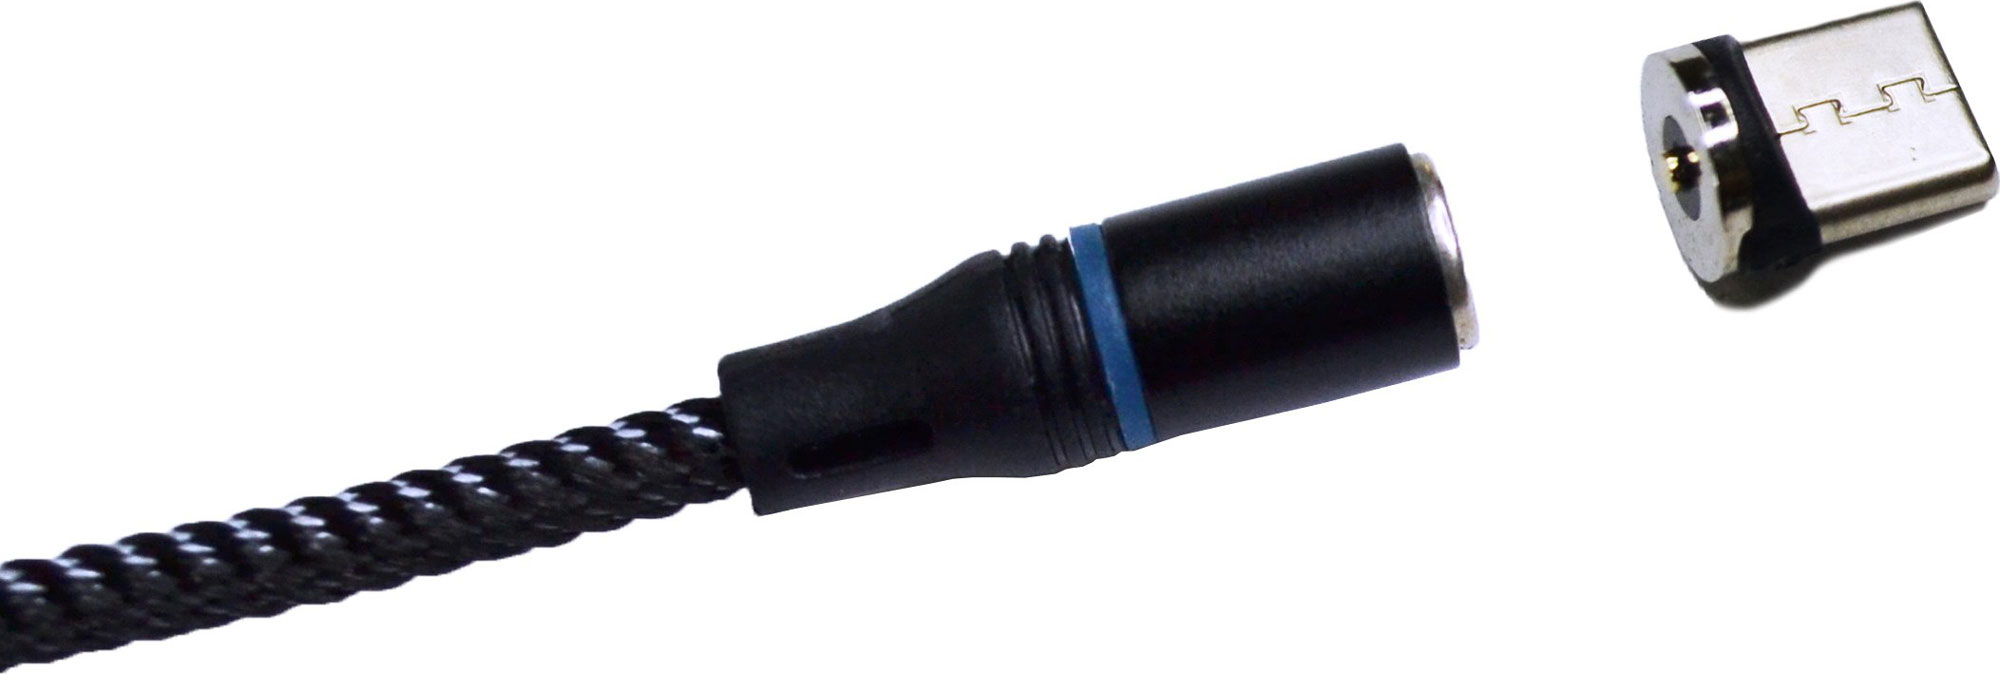 Кабель PROFIT QY-82 Magnetic Micro USB 1m 2.4A Black в Киеве